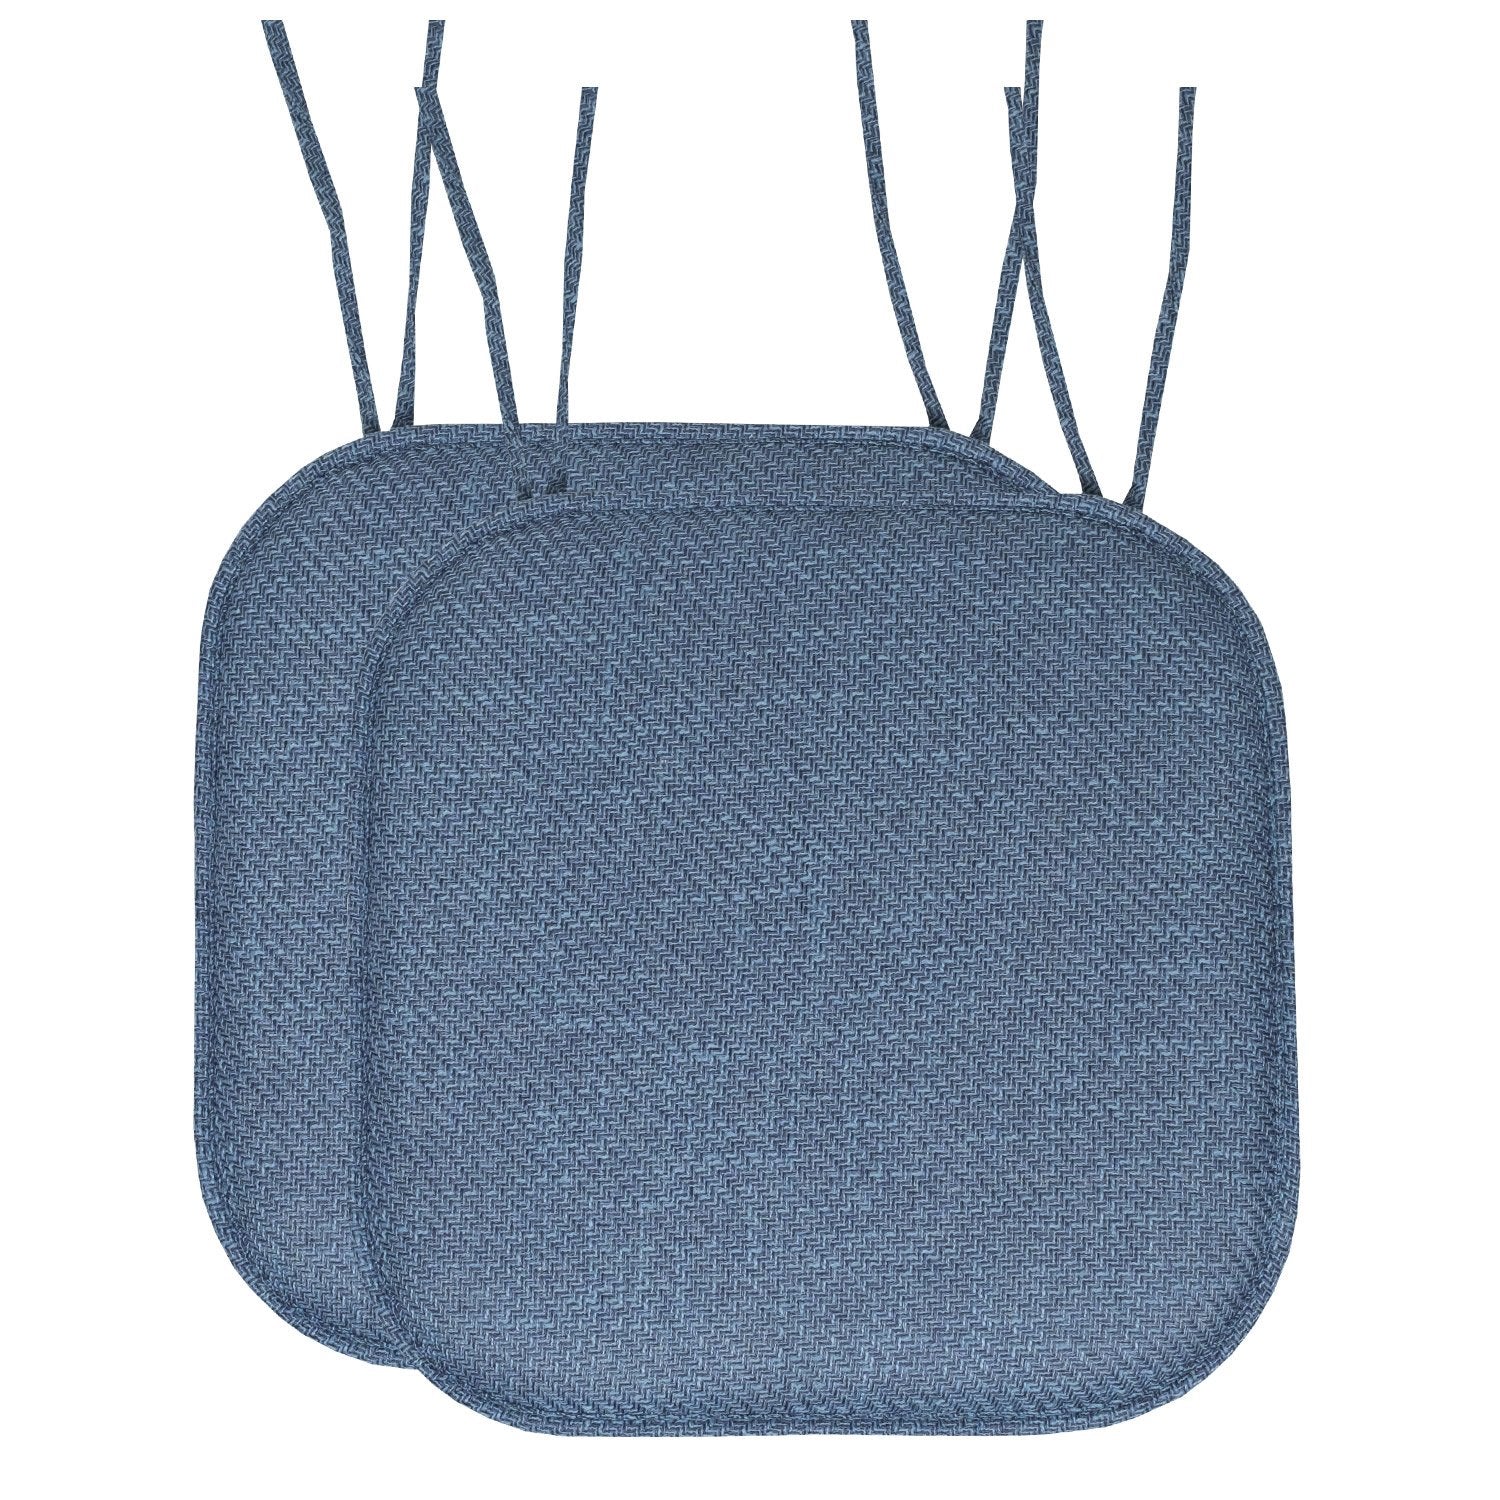 Herringbone Chair Cushion Set with Ties Blue 2-Pack